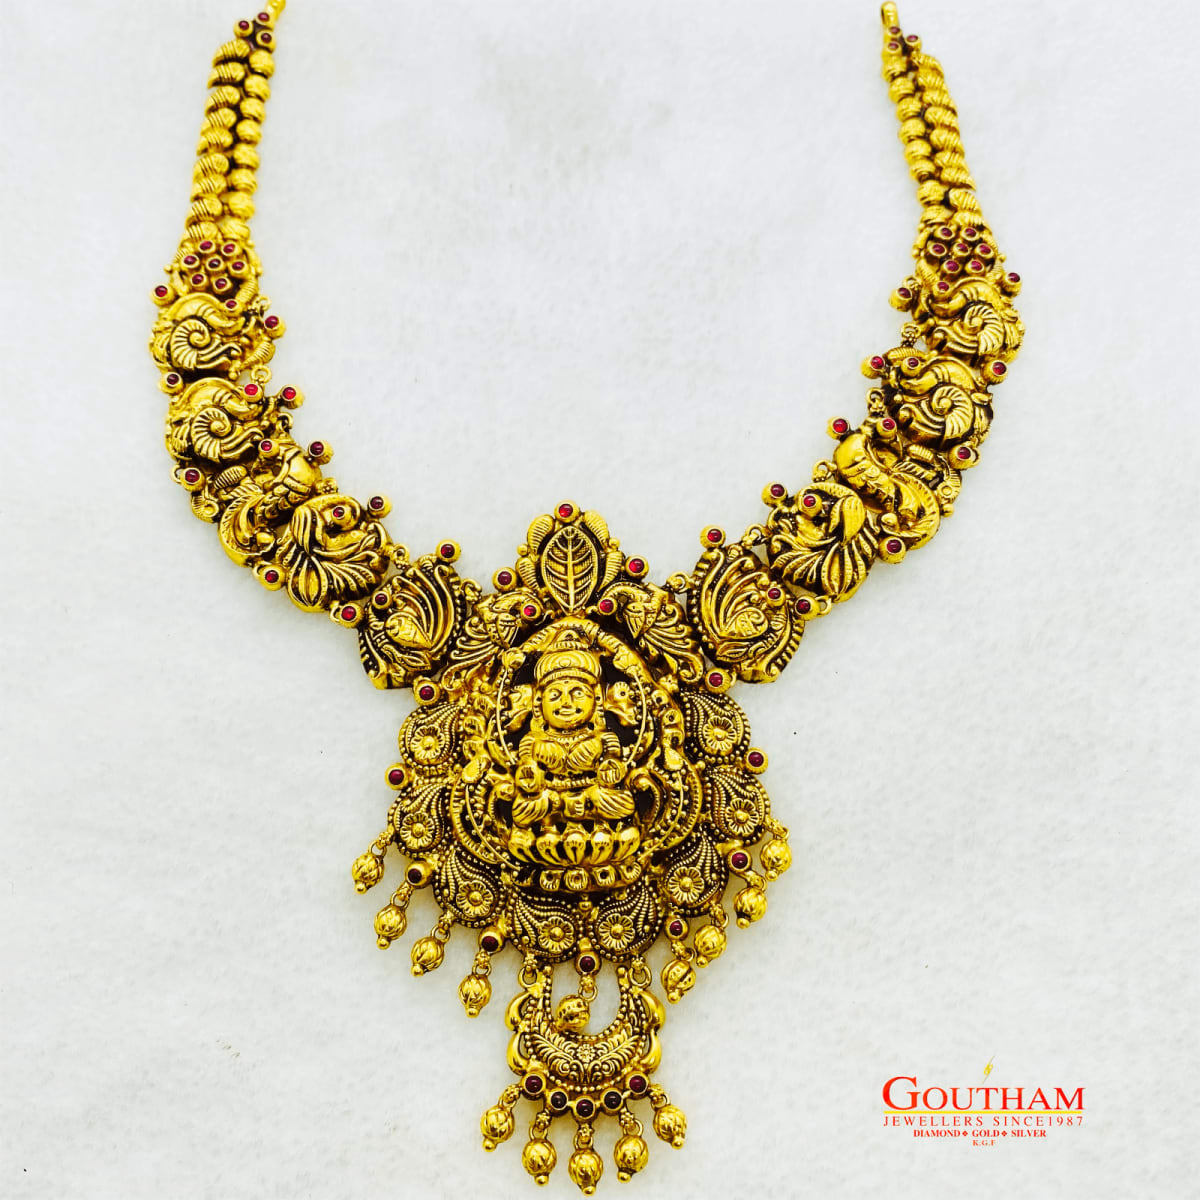 Goutham Jewellers KGF - Gold & Diamond Jewellery Shopping Store